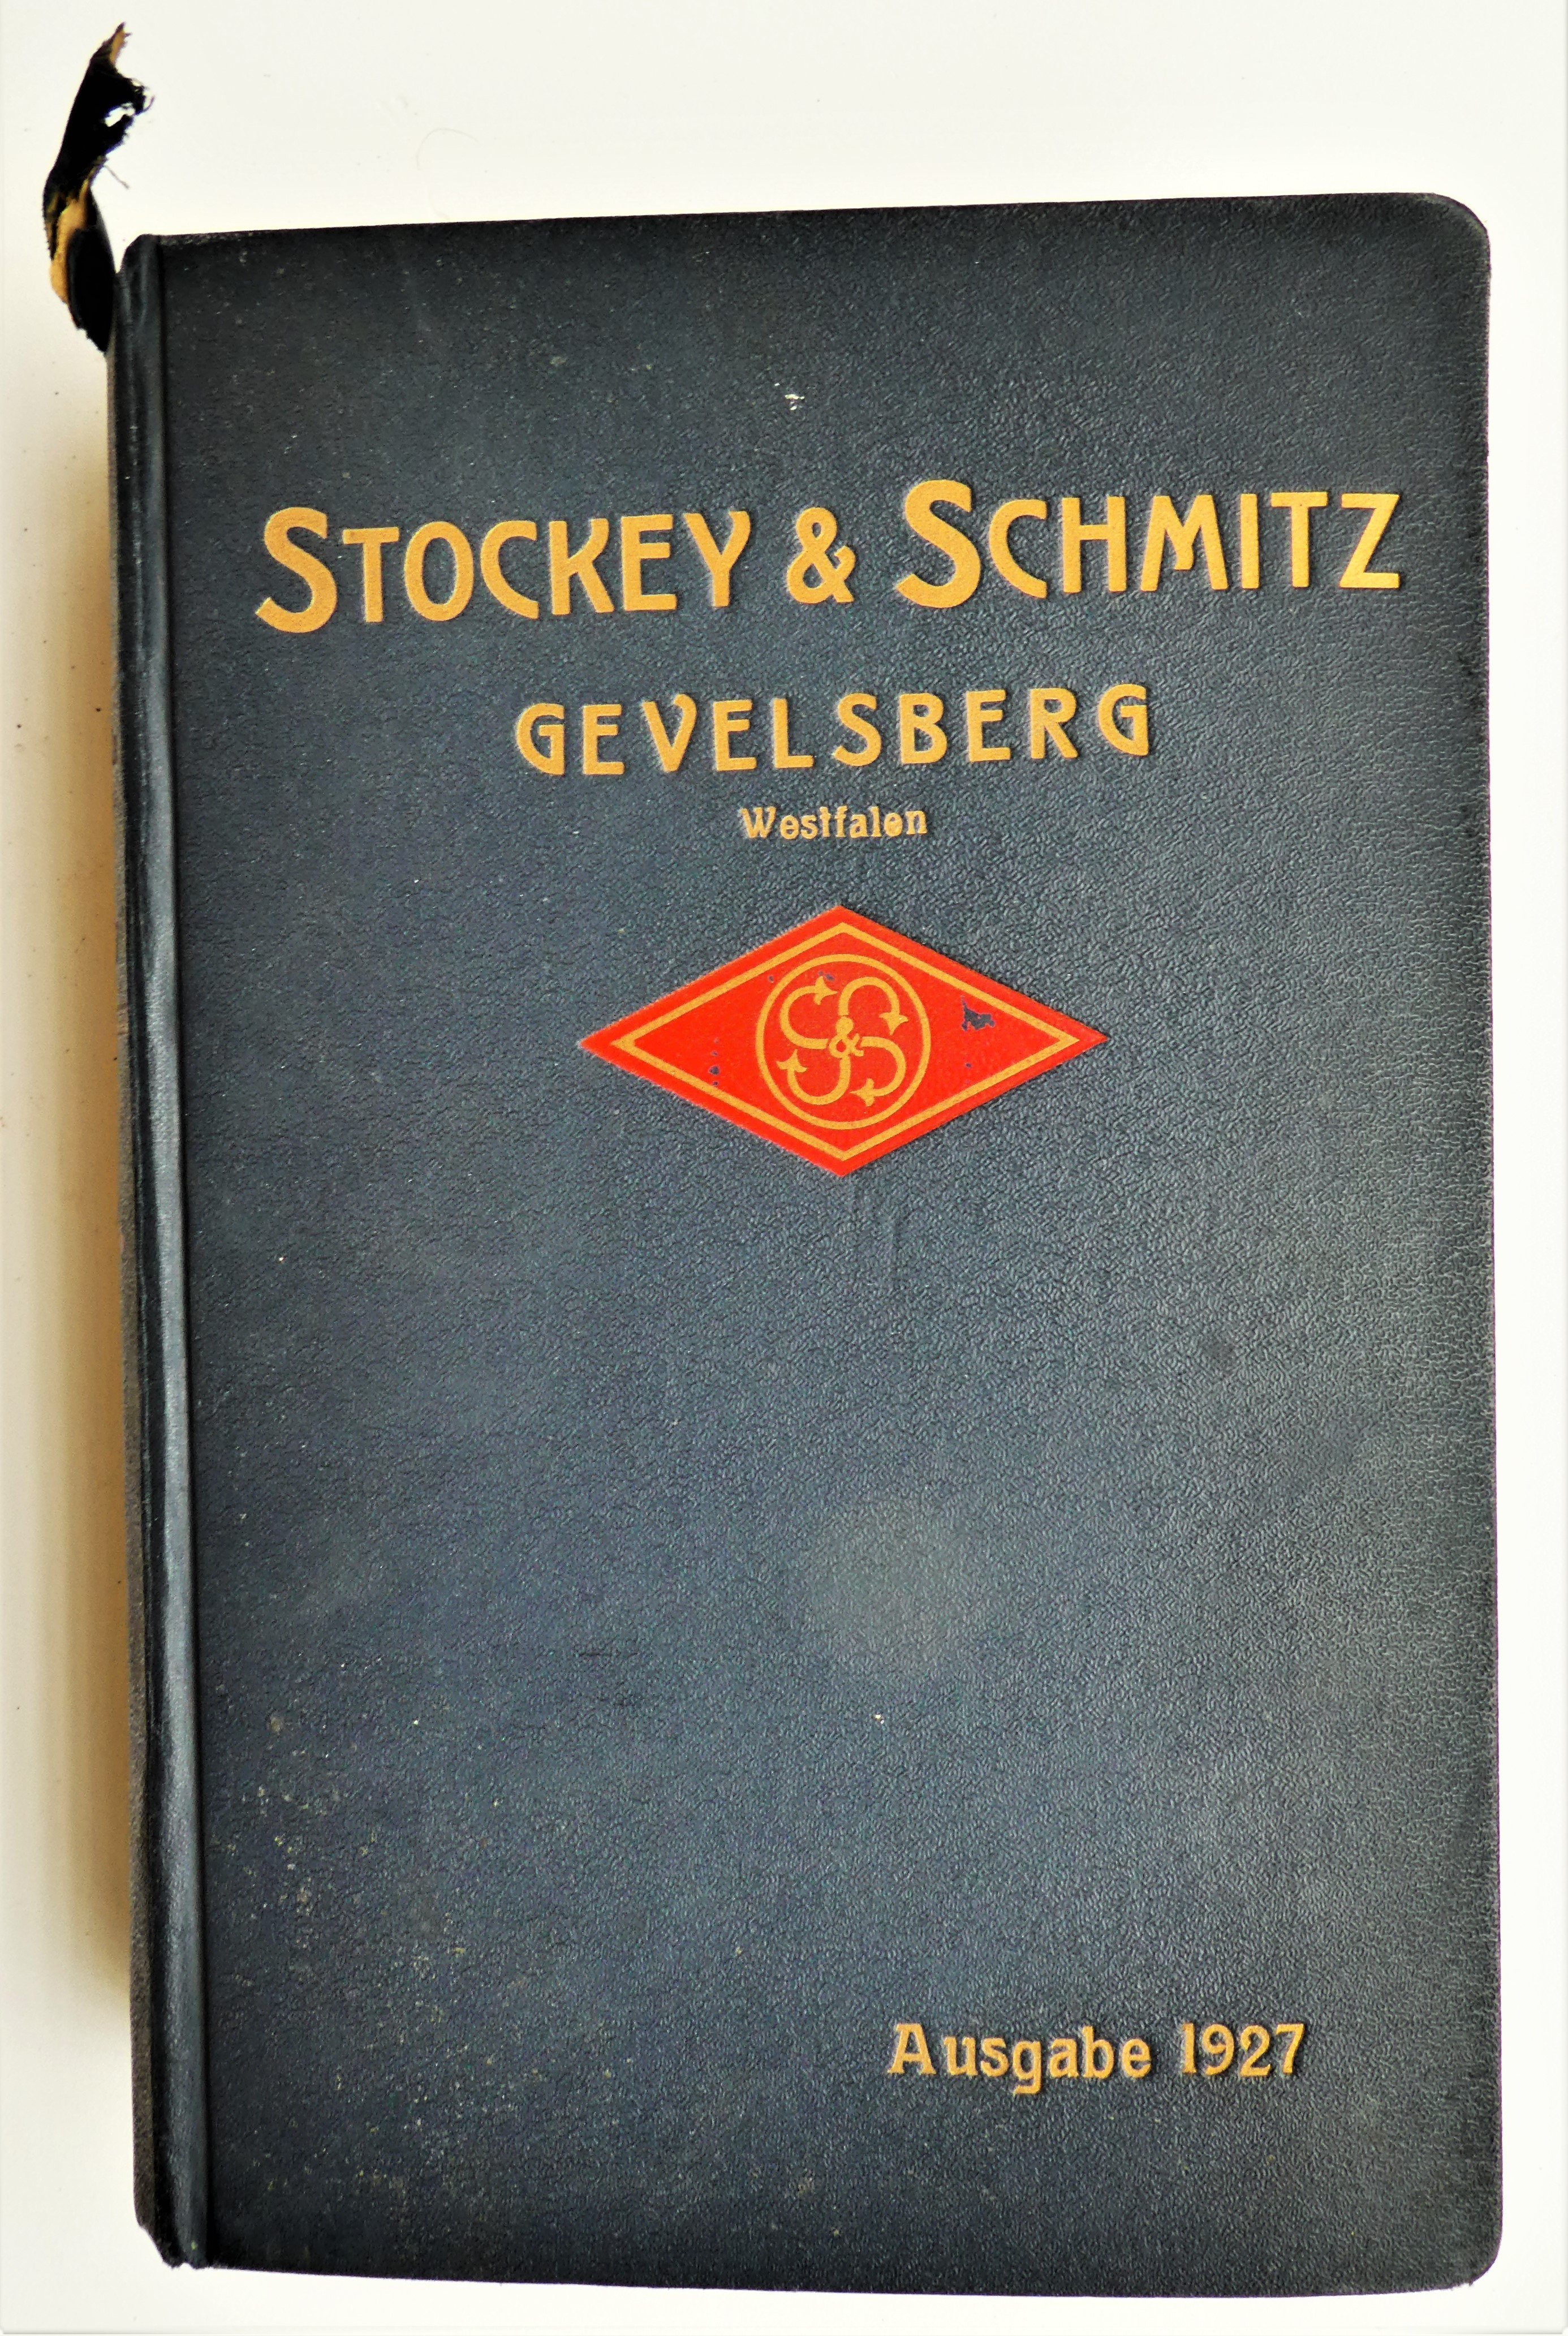 Hauptkatalog von Stockey & Schmitz, Ennepetal (Sammlung Stadthistorisches Museum Ennepetal CC BY-NC-SA)